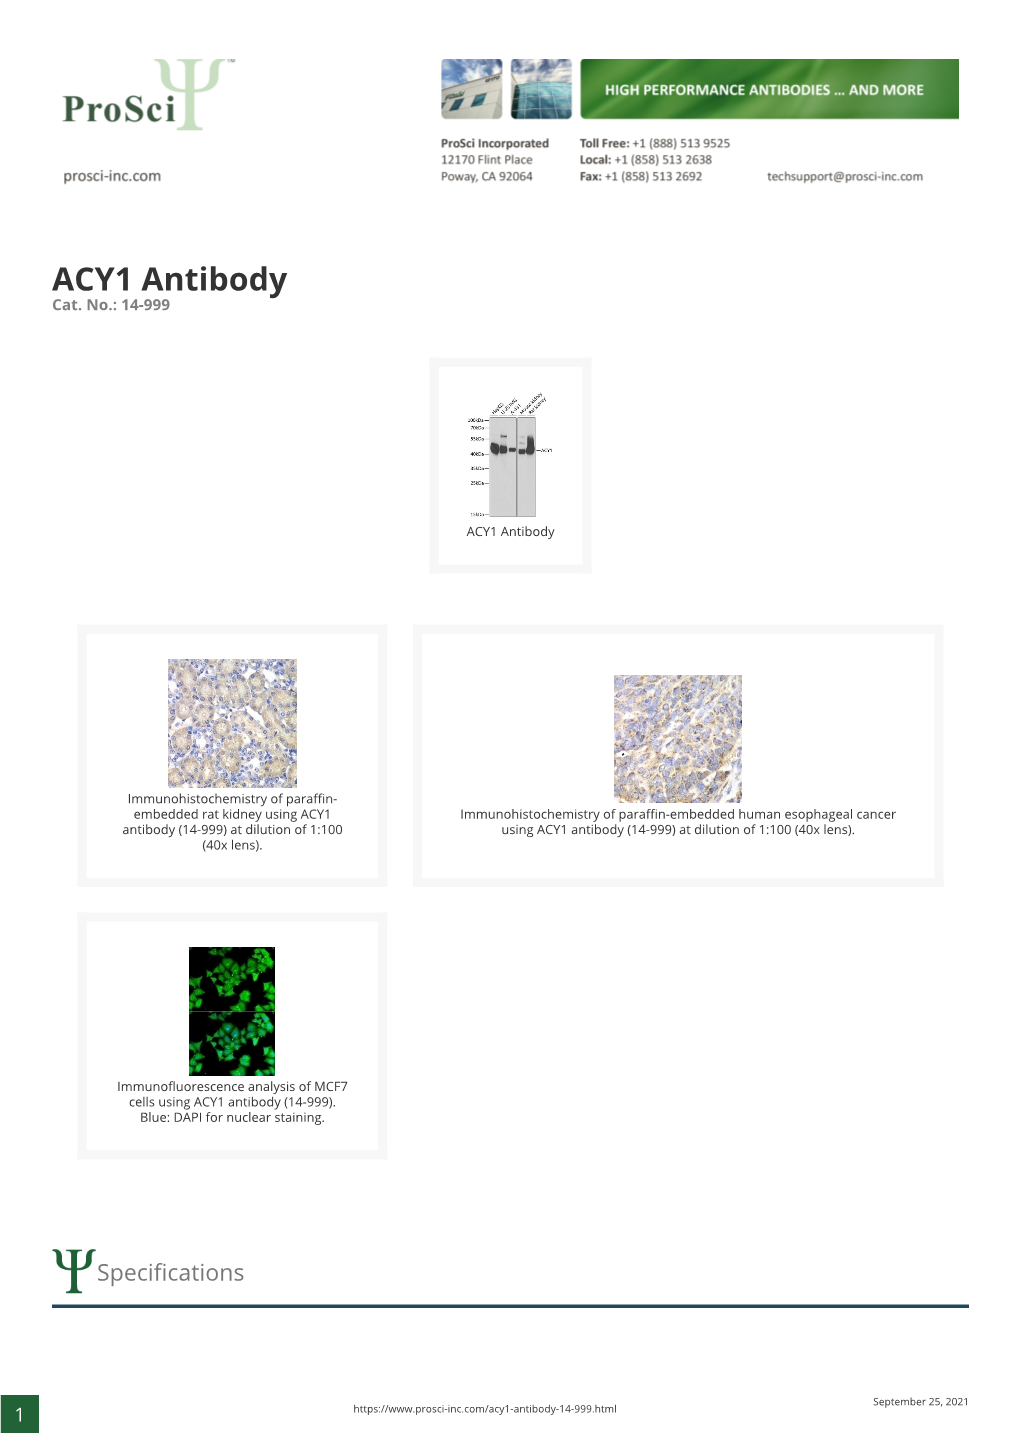 ACY1 Antibody Cat